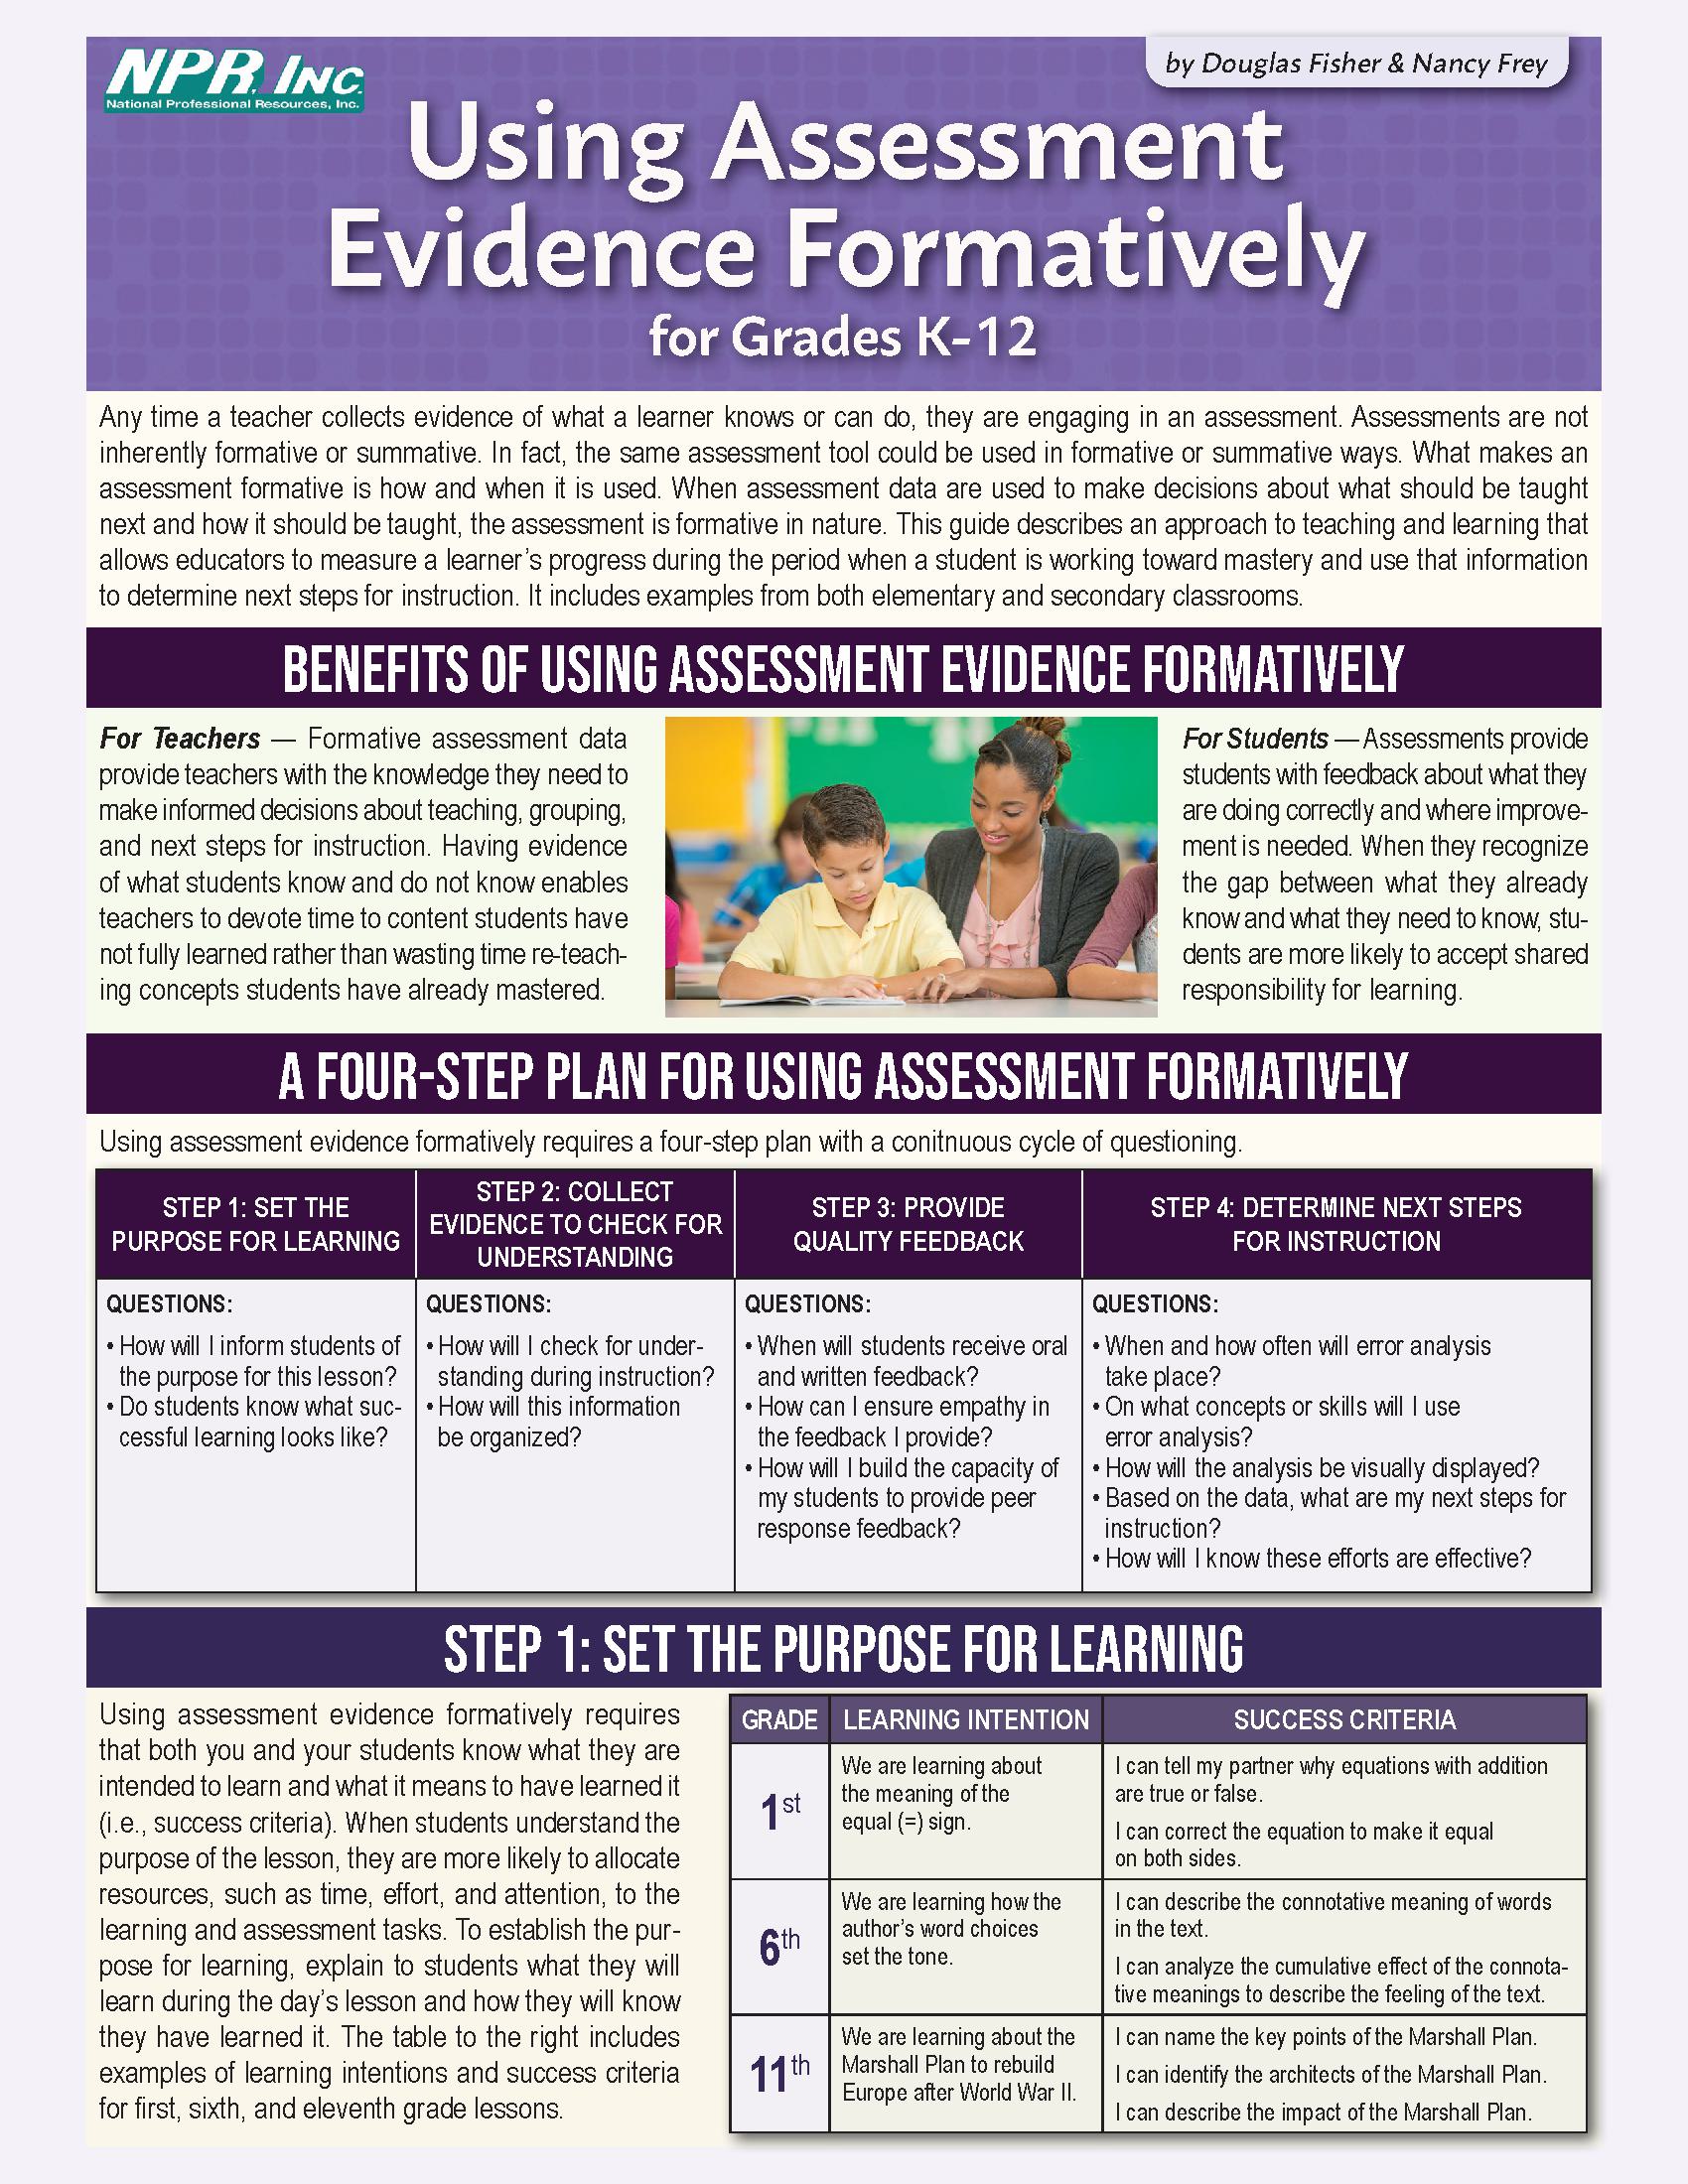 Using Assessment Evidence Formatively for Grades K-12